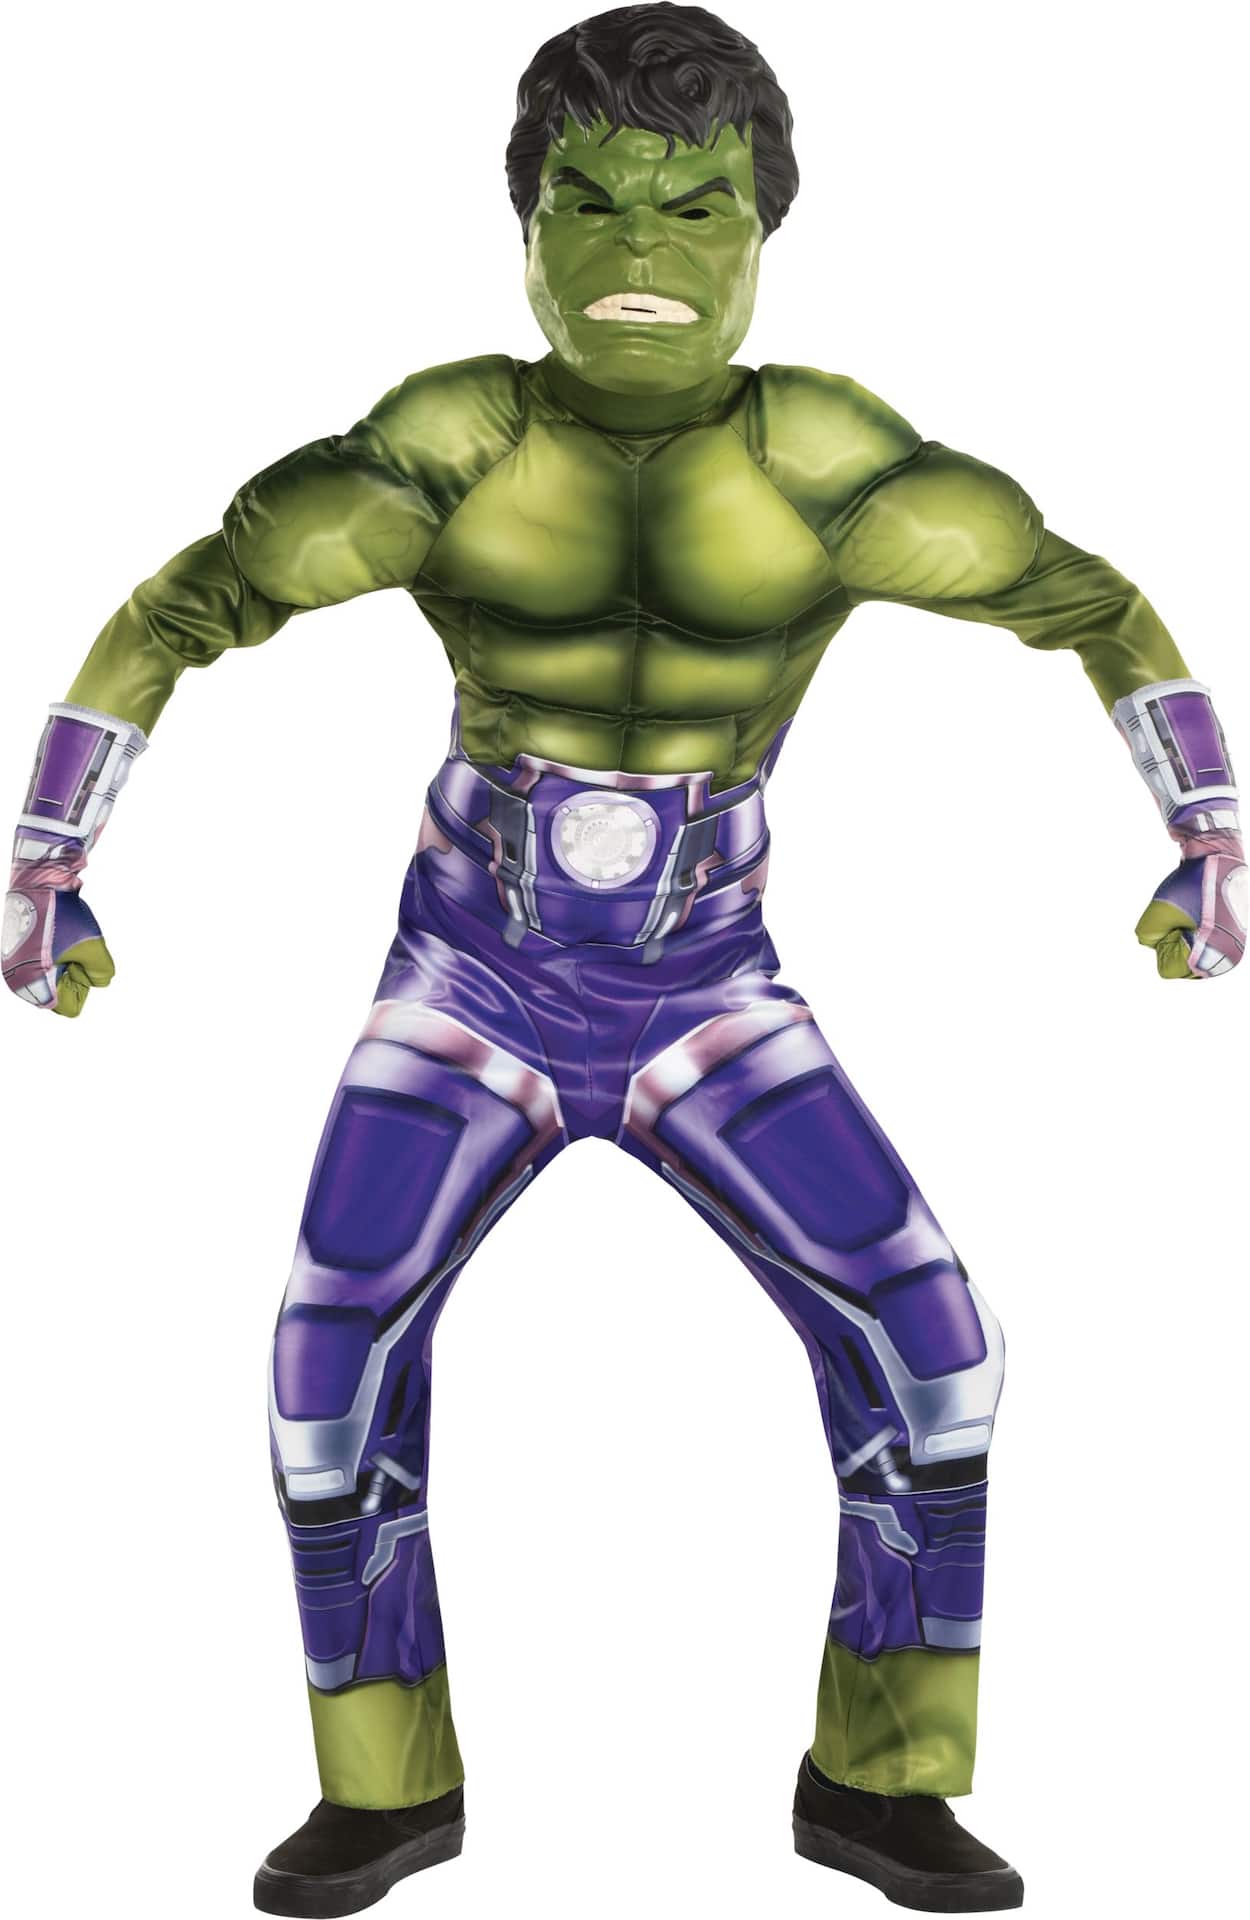 Hulk gants et masque - Kit Marvel Avengers enfant - Magie du déguisement